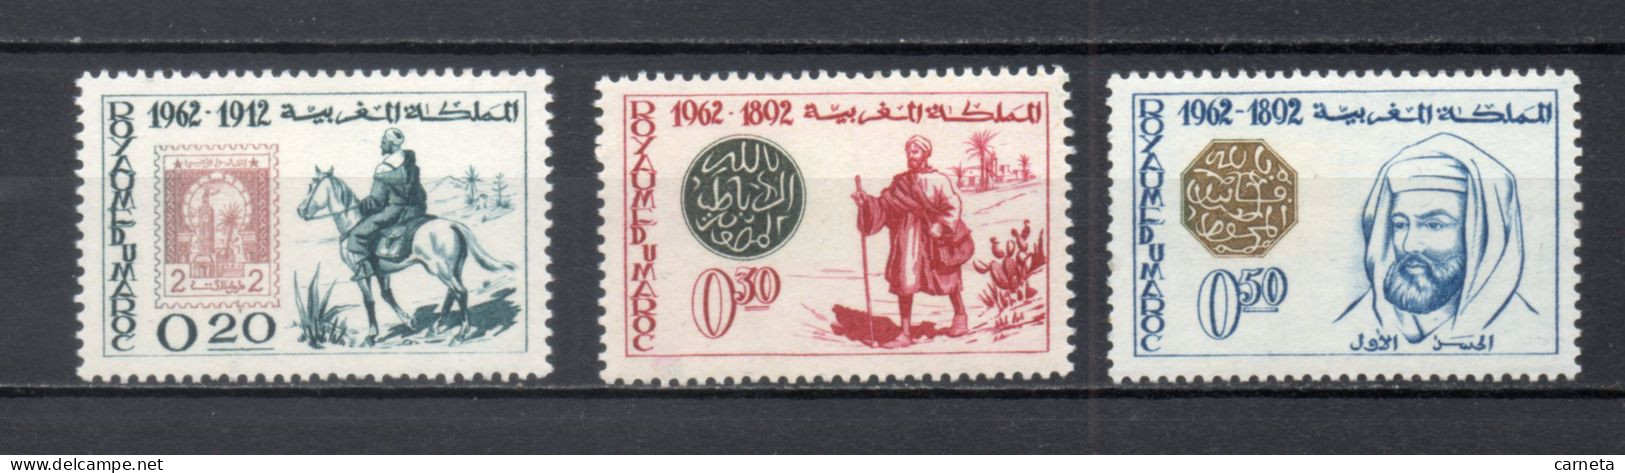 MAROC N°  450 à 452    NEUFS SANS CHARNIERE  COTE 4.05€    JOURNEE DU TIMBRE ANIMAUX CHEVAL SULTAN - Morocco (1956-...)